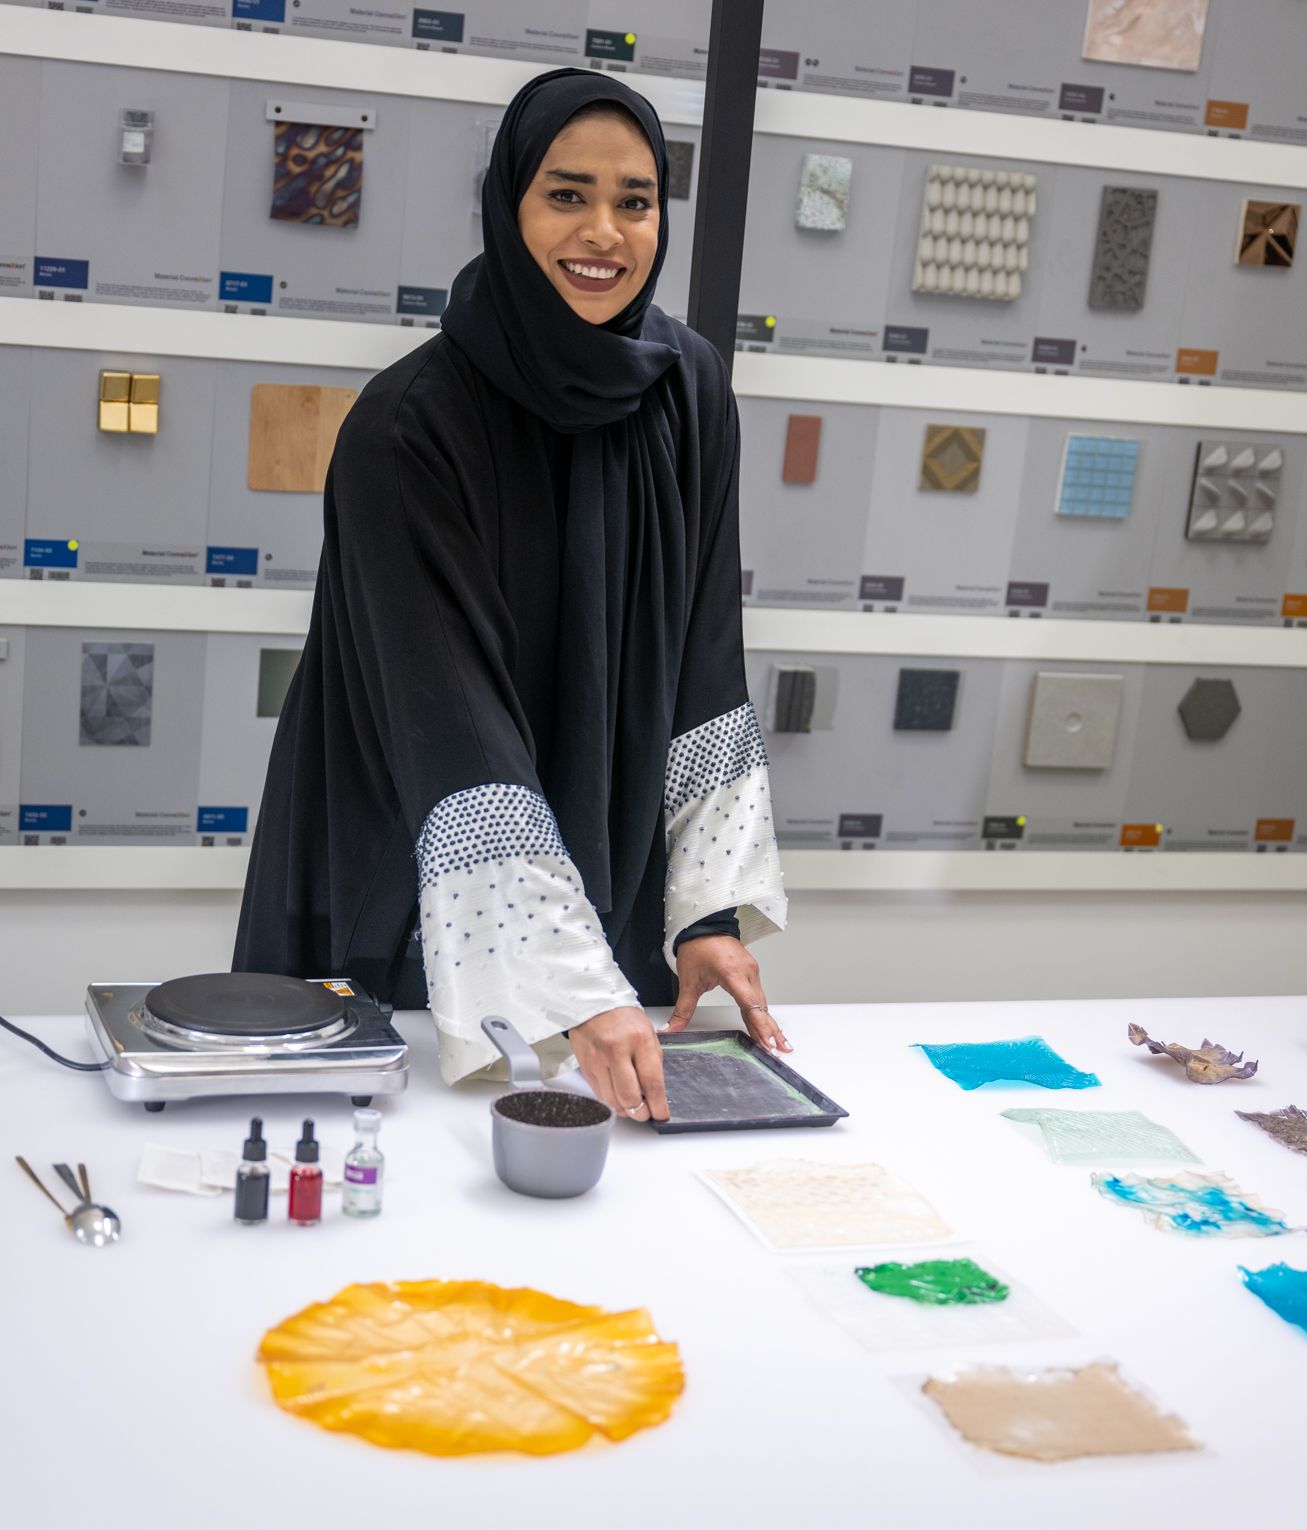 Qatari designer Rabab Abdulla stands behind her work station with materials for creating bio plastics.